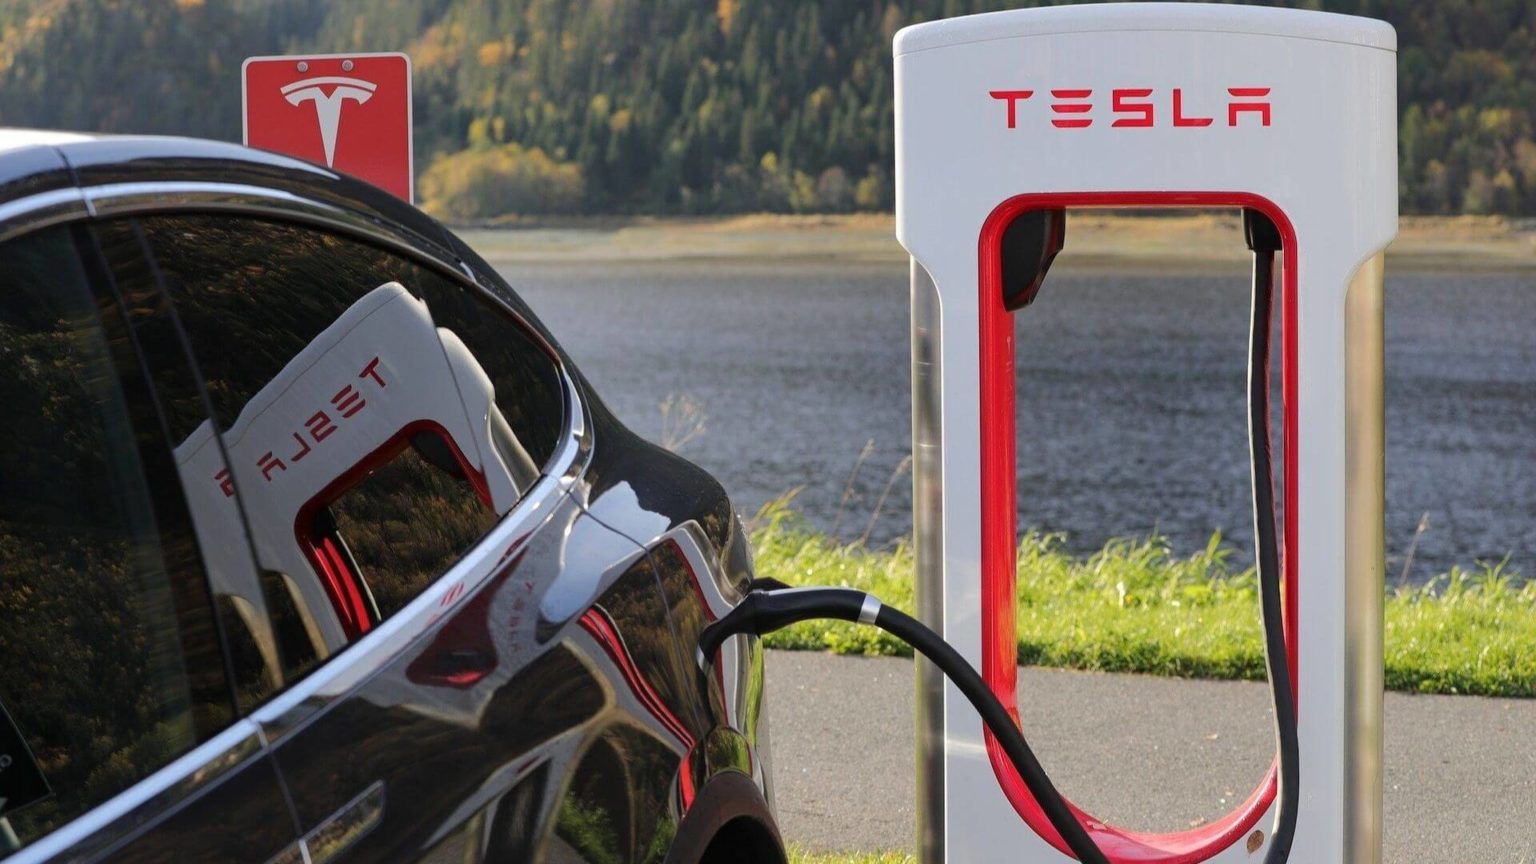 Borne de recharge Tesla